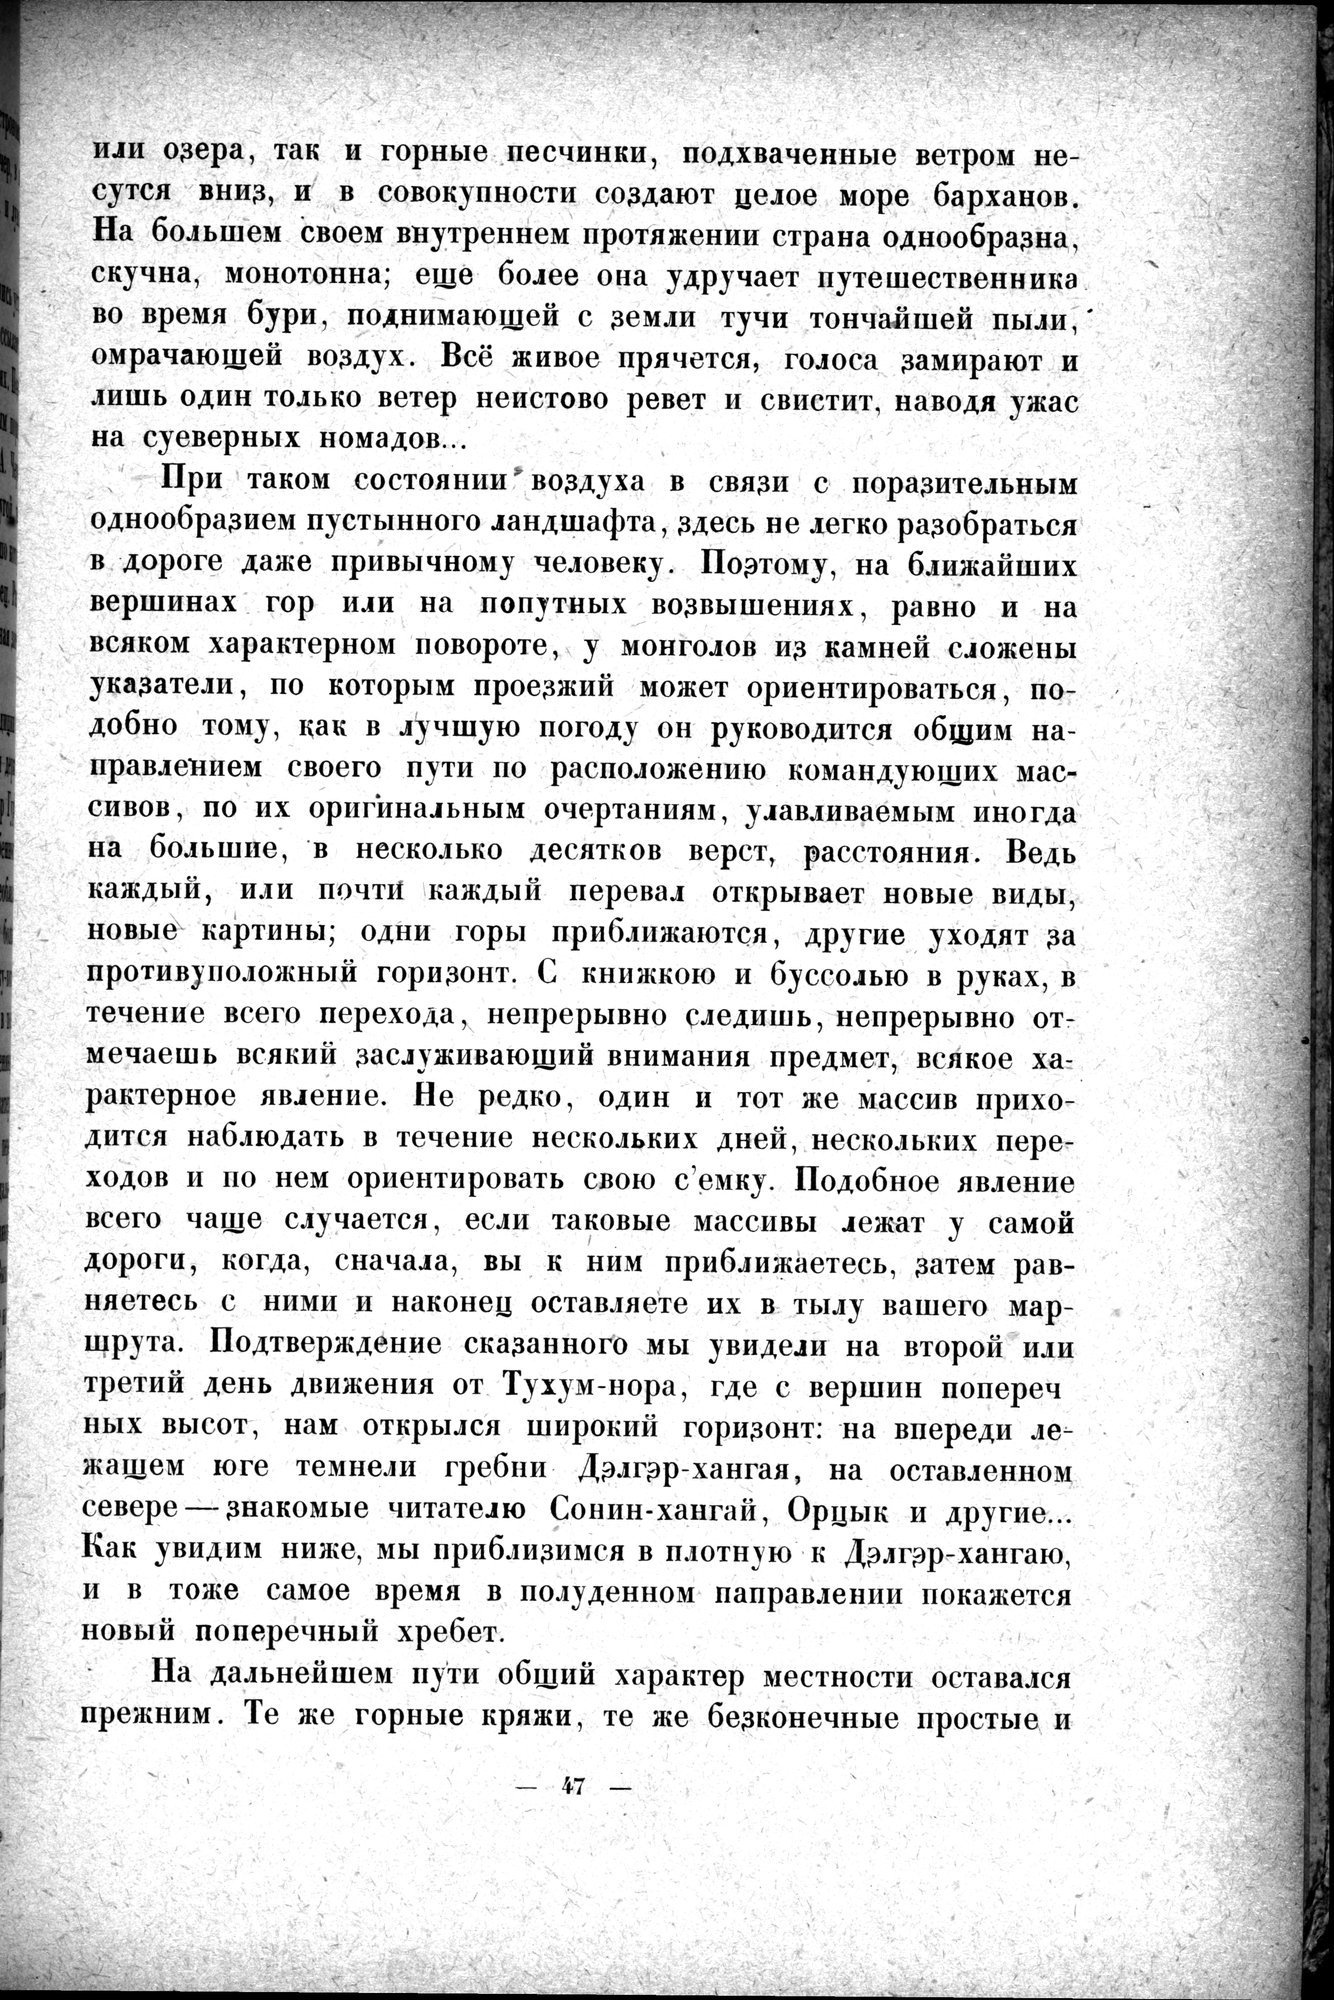 Mongoliya i Amdo i mertby gorod Khara-Khoto : vol.1 / Page 71 (Grayscale High Resolution Image)